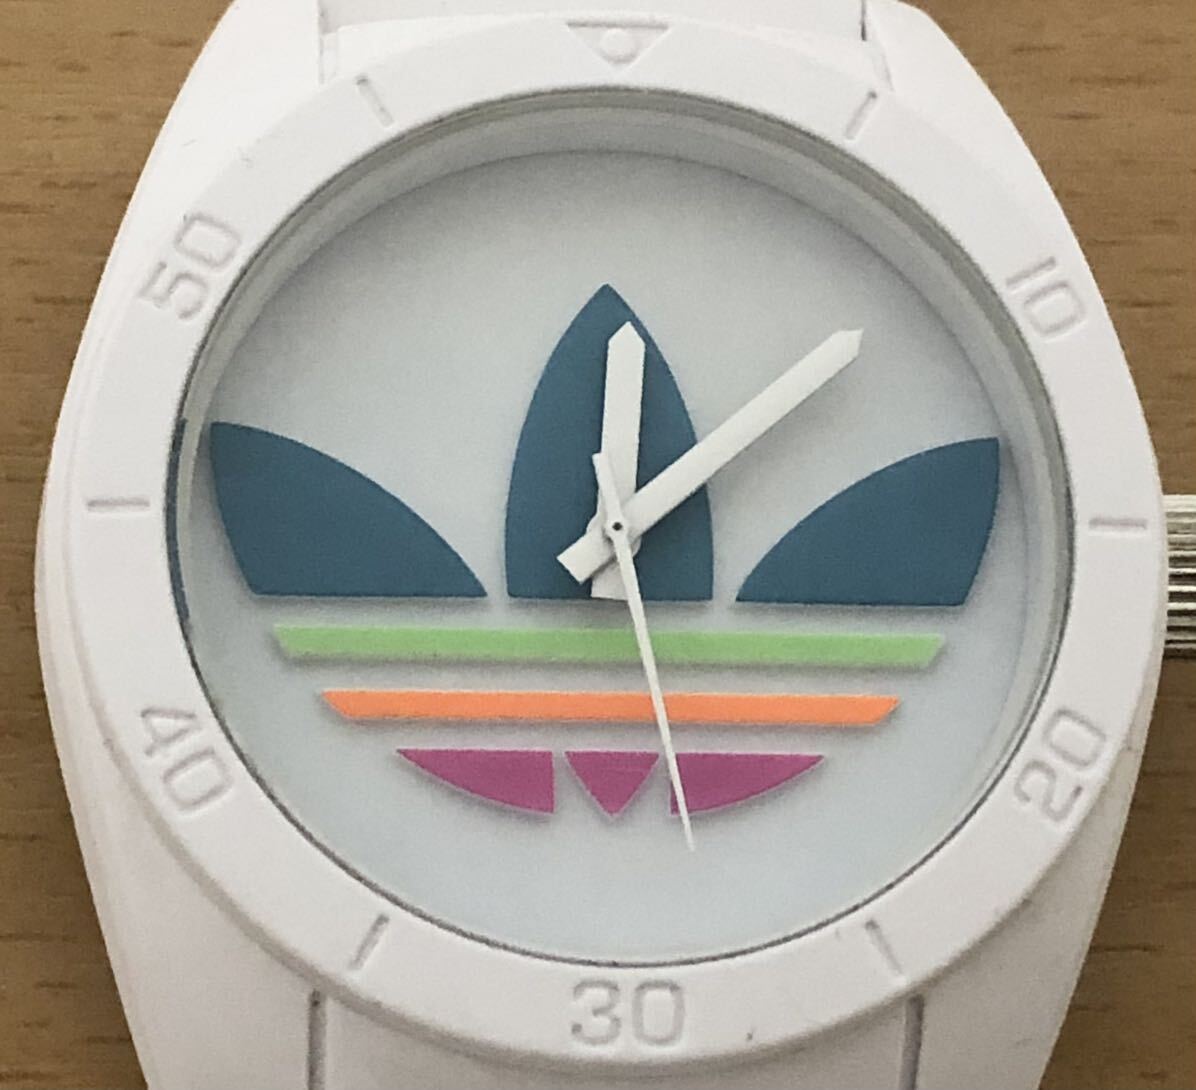 245-0368 adidas アディダス メンズ腕時計 ラバーベルト クオーツ 白 ホワイト ADH2916 電池切れ 動作未確認の画像1